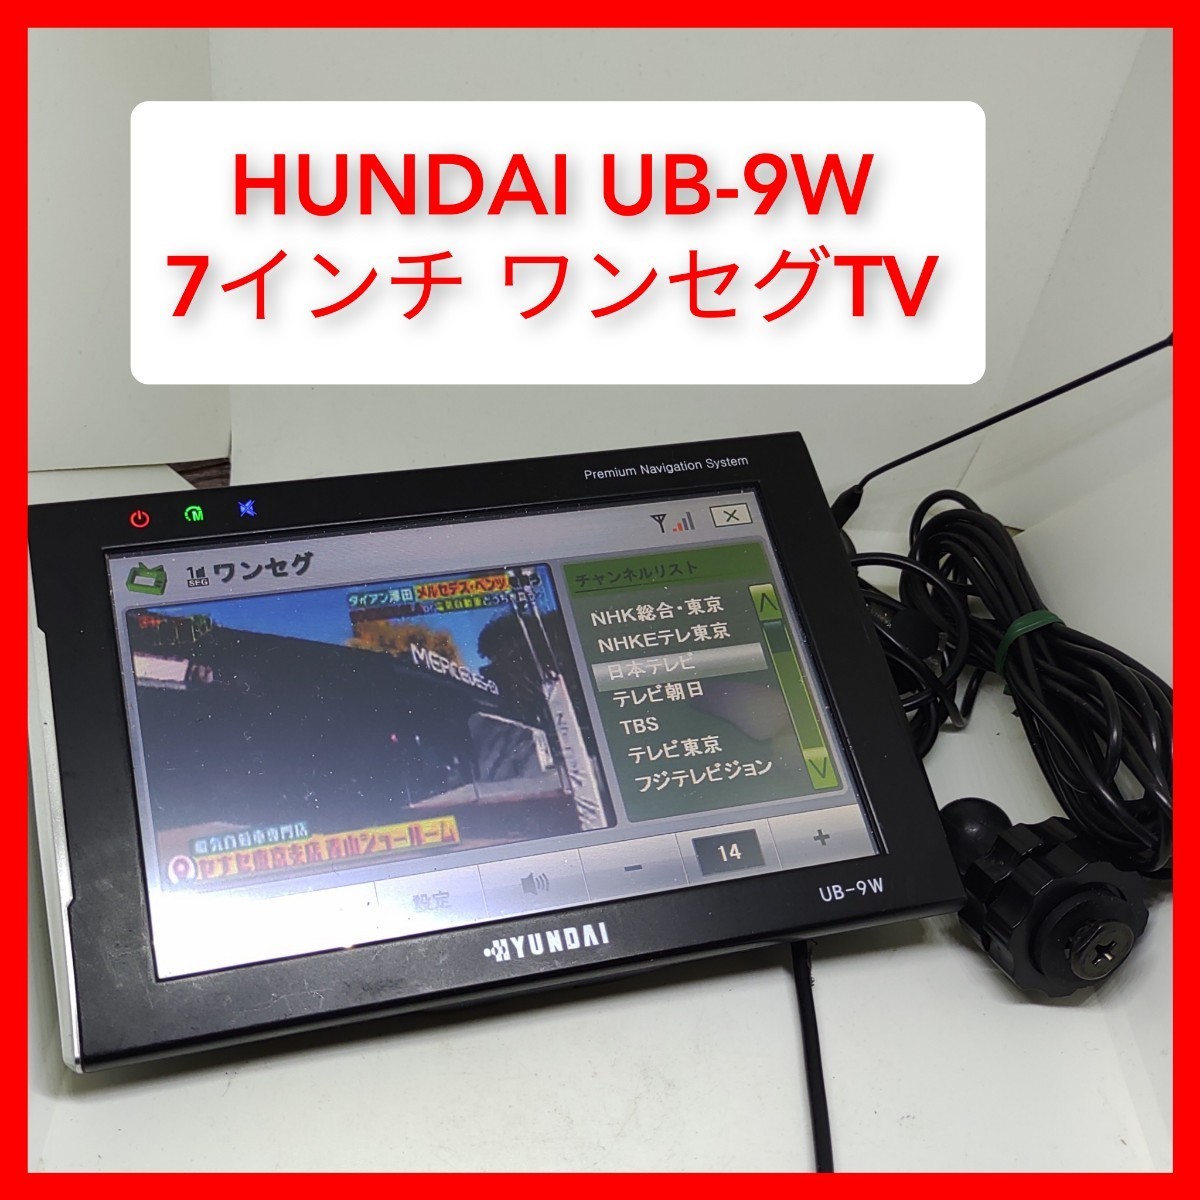 HYUNDAI UB-9W 7インチ ワンセグTV シガーアダプター カーナビゲーション USB付 家庭利用可能 入院,寝室,暇潰しに 延長アンテナ付_画像1